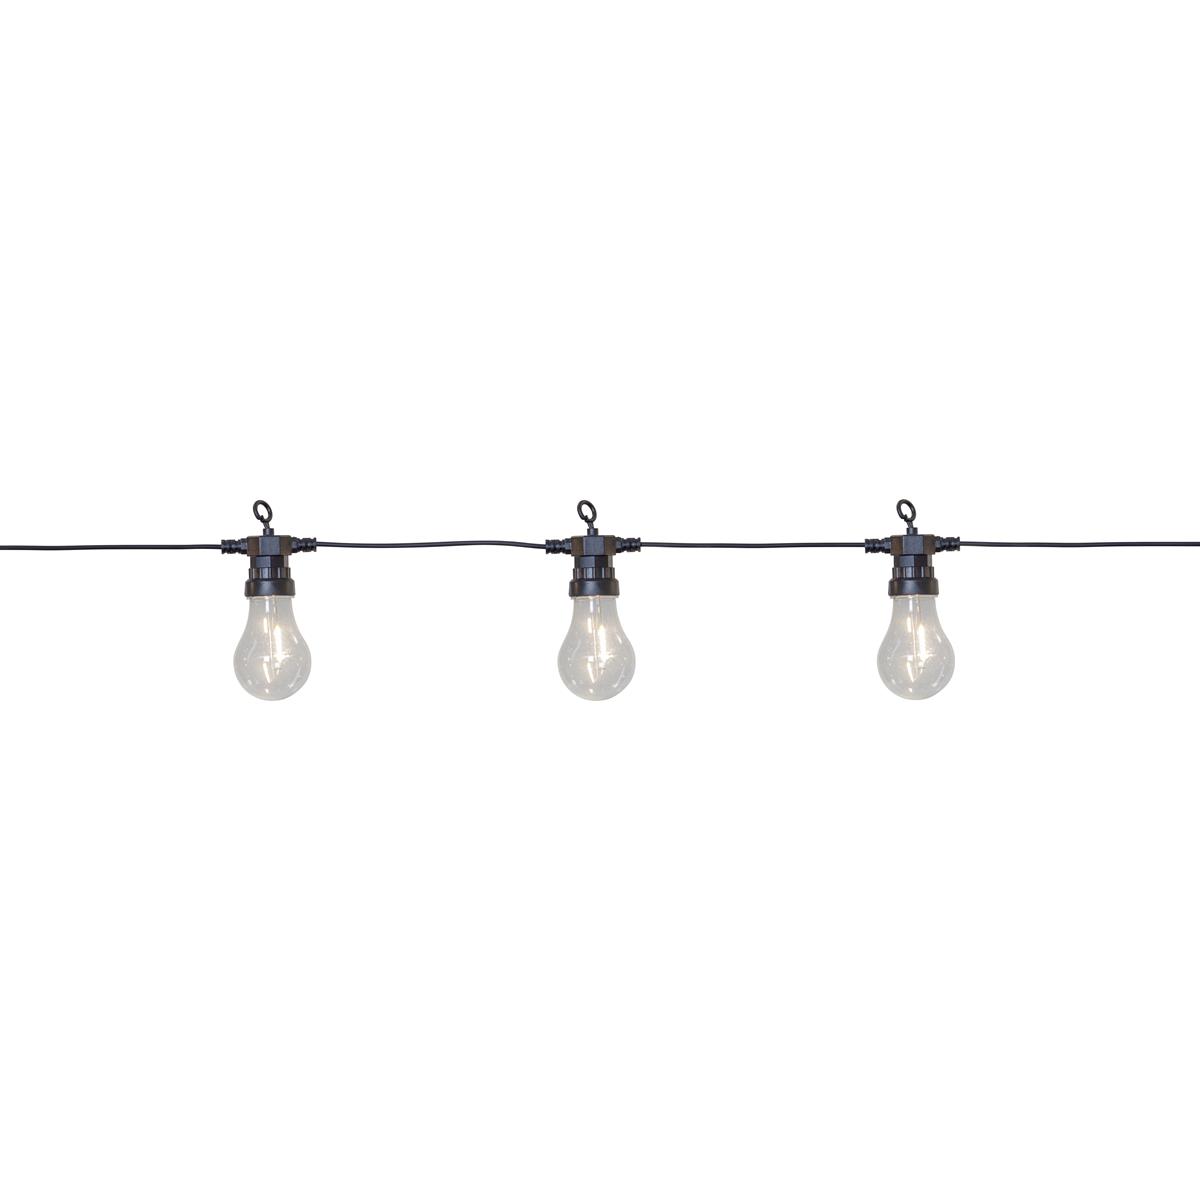 LED Lichterkette "Circus Filament" - 10 Birnen - warmweiße Filament LED - 4,05m - Trafo - outdoor